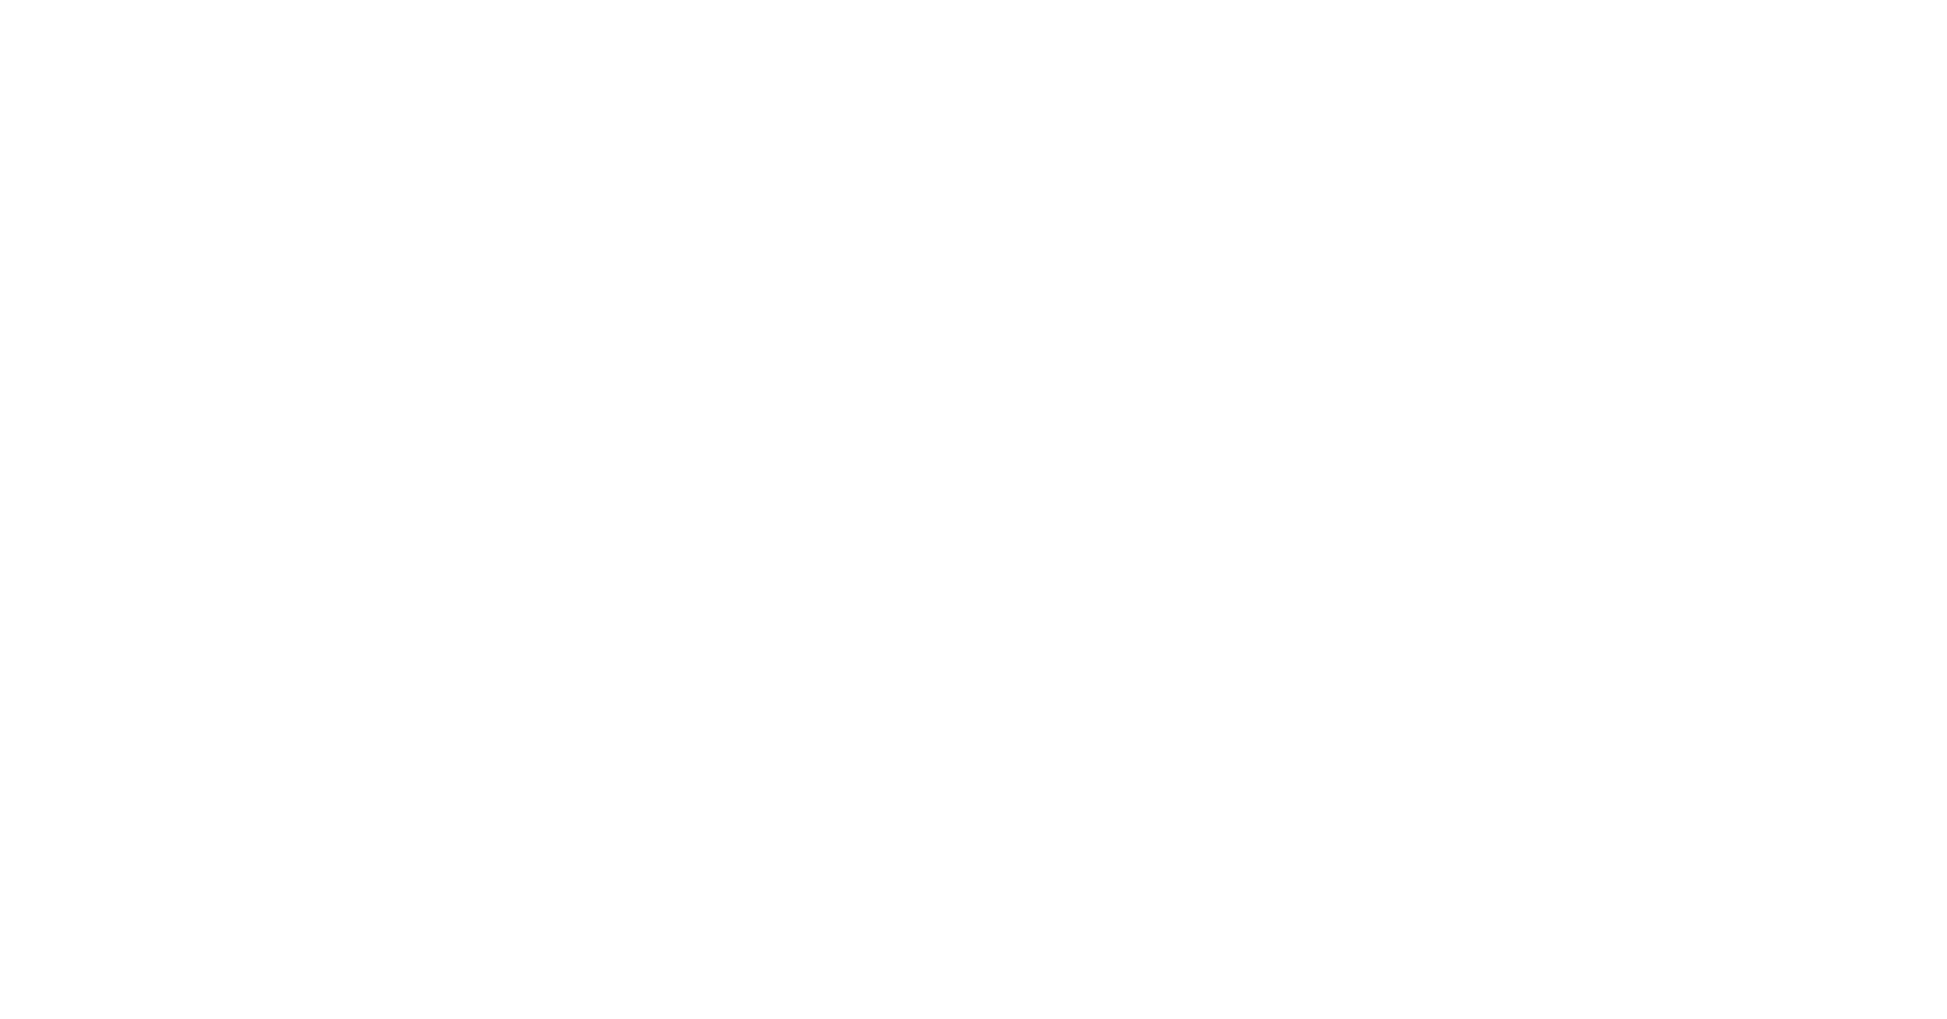 team.chrislewis.co.ukhs-fshubfsraw_assetspublicChrislewis_Dec2020imagesgroup-logo-2